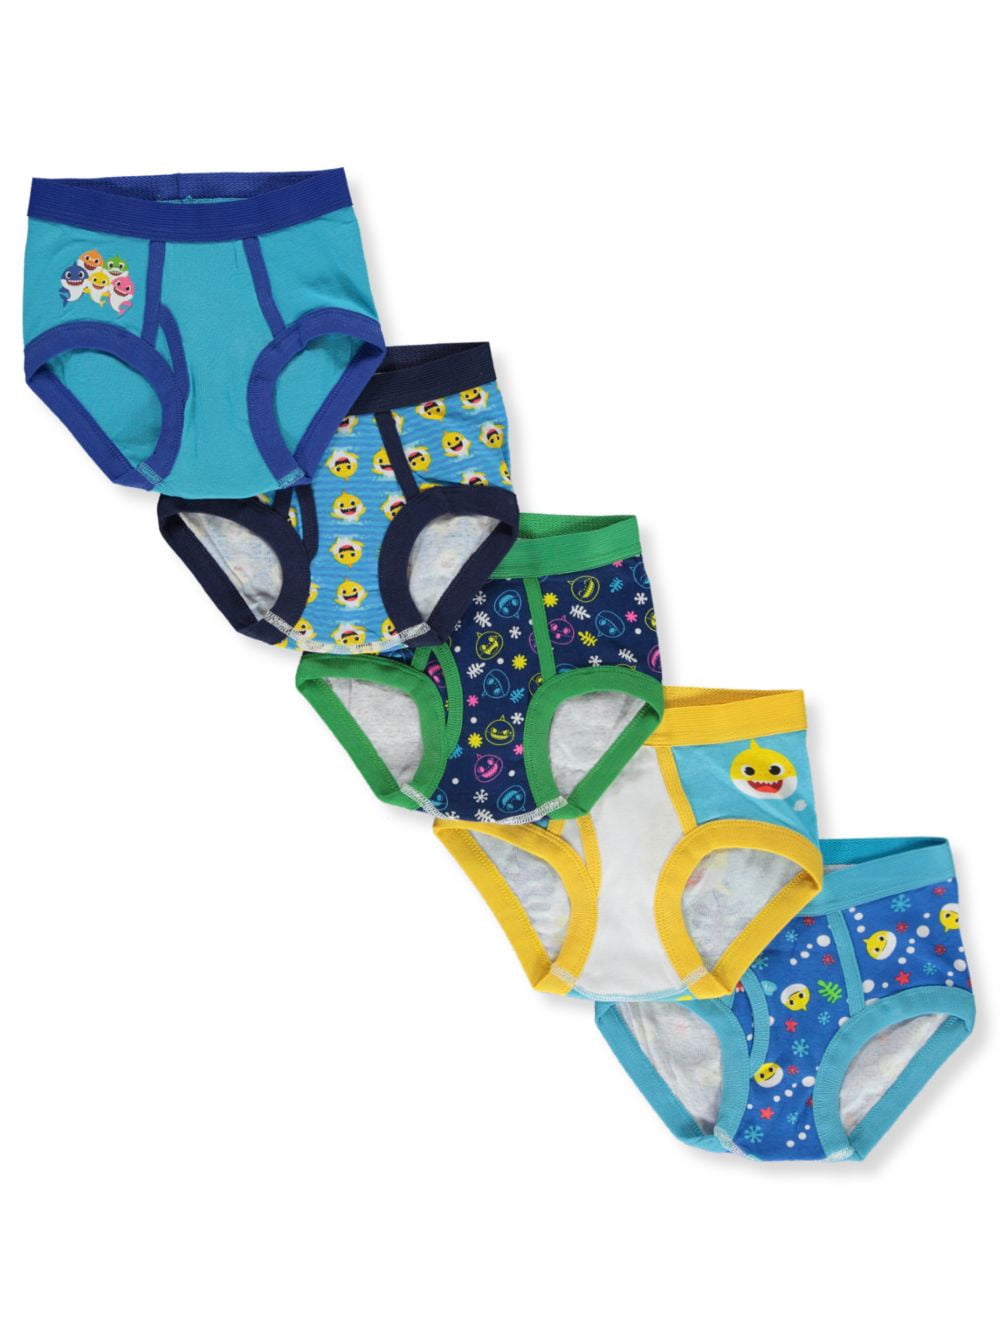 Baby Shark Boys' 5-Pack Briefs - blue/multi, 2t - 3t (Toddler